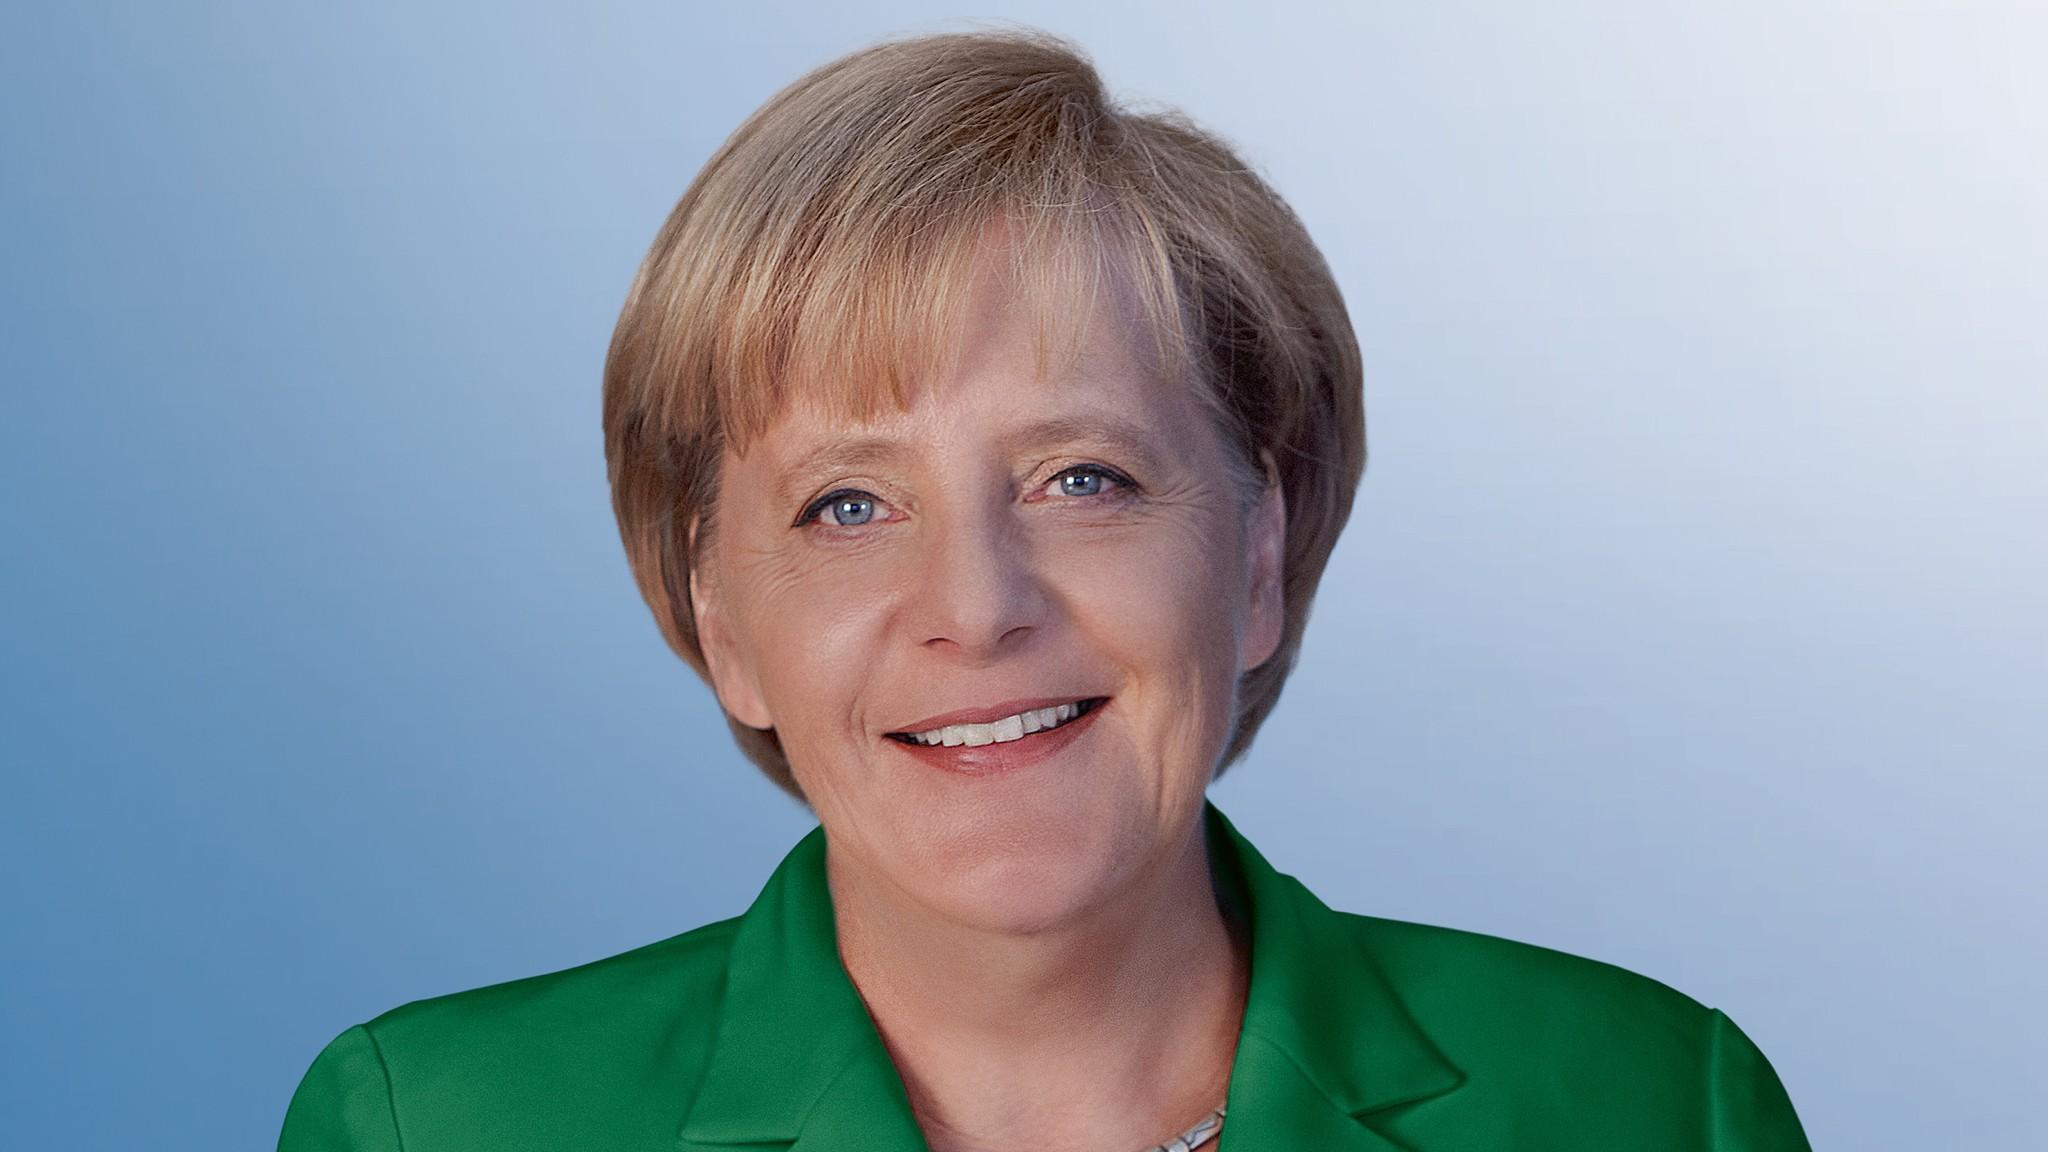 Angela Merkel Photo Wallpaper High Quality